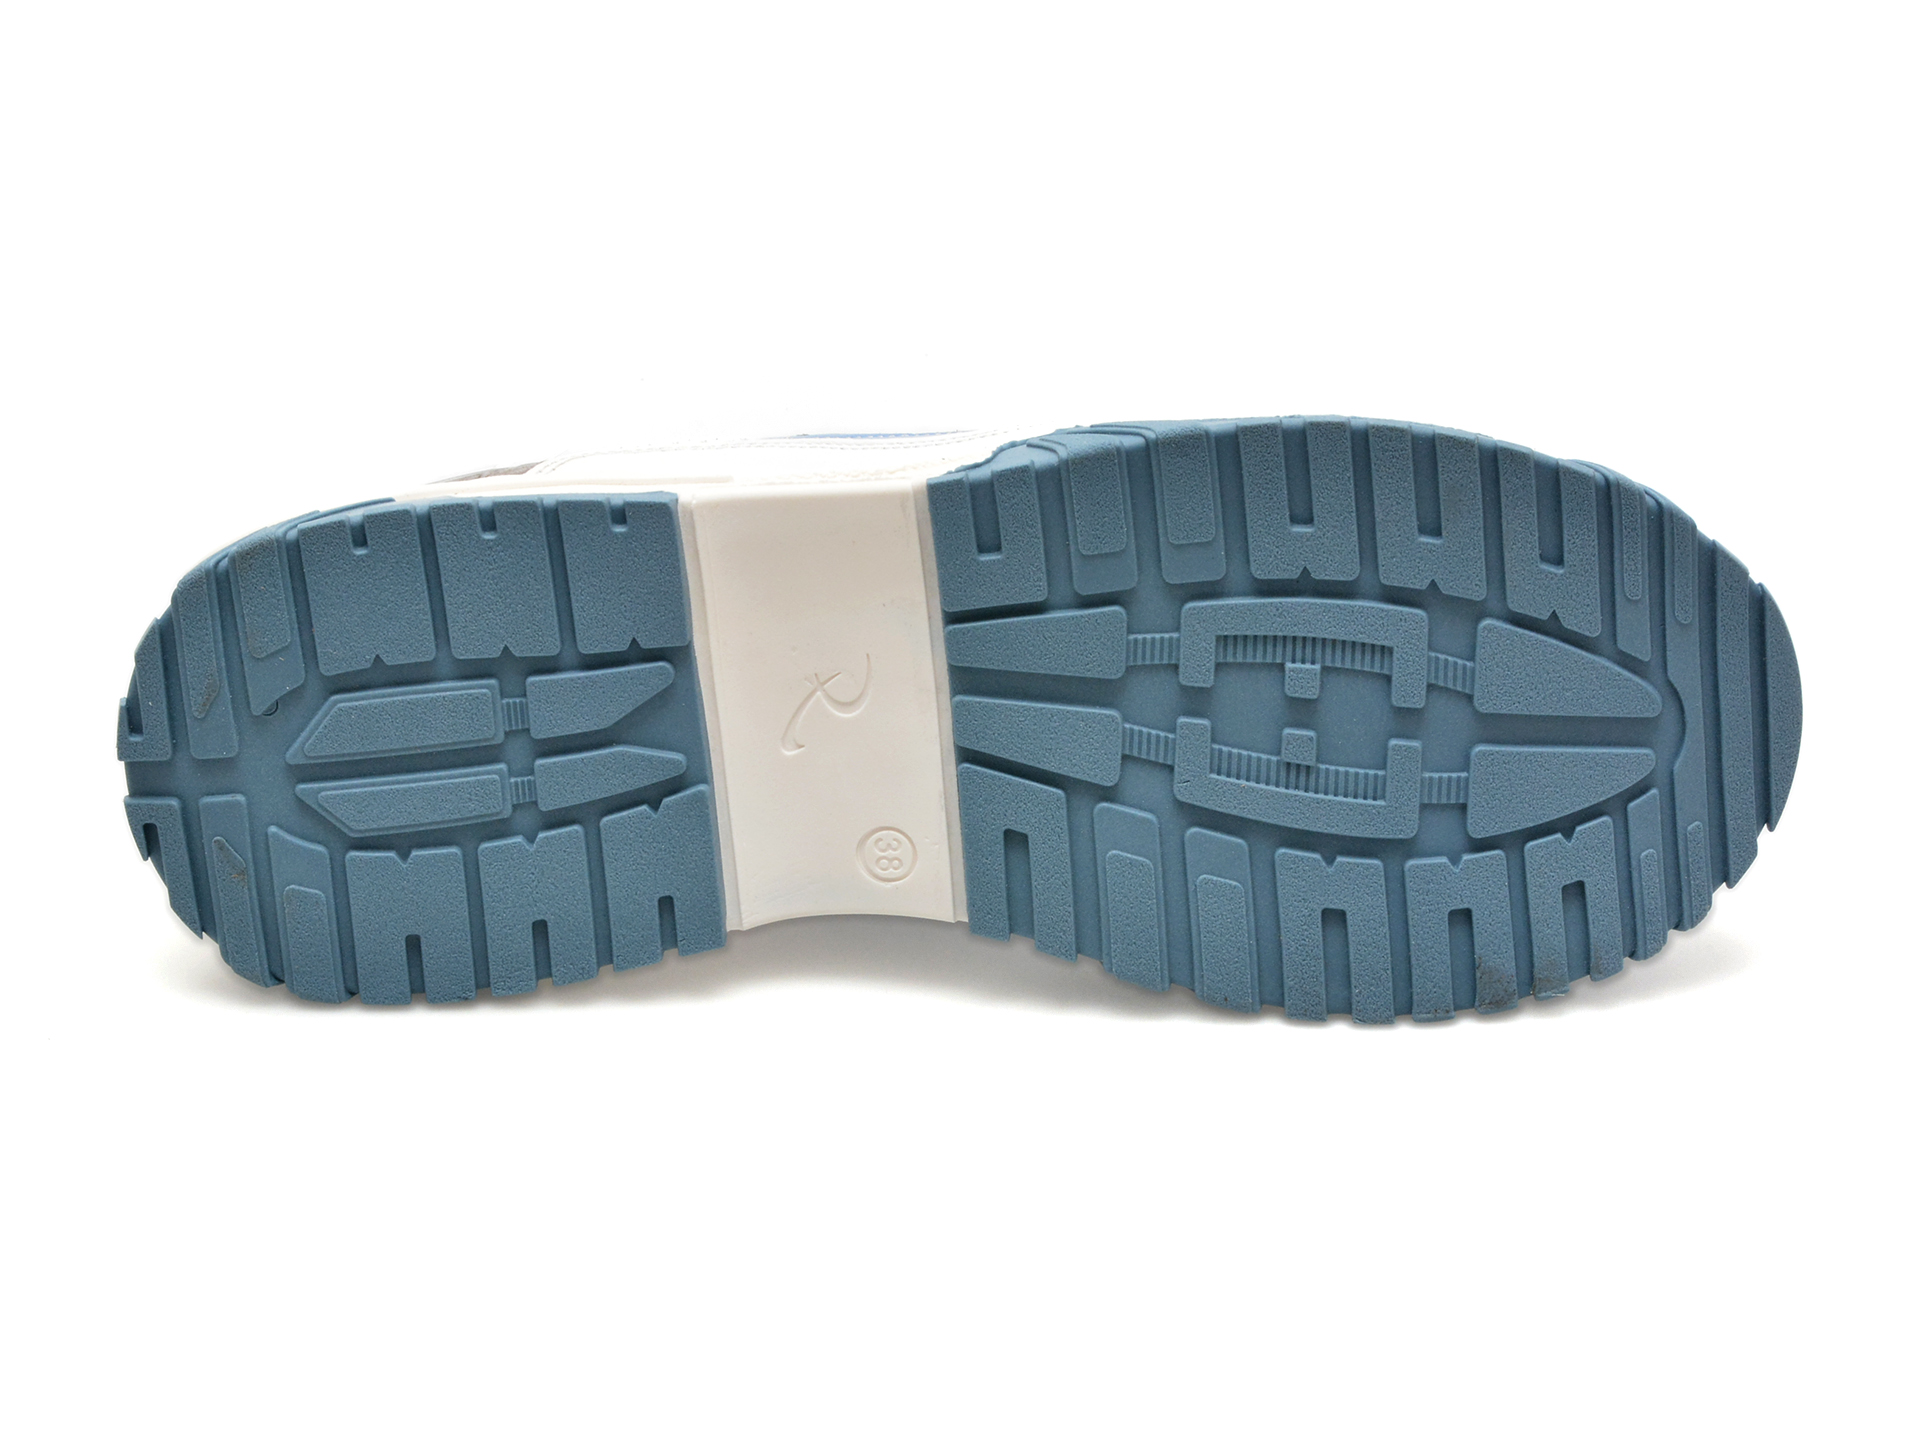 Pantofi DONNA CRIS albastri, 8501, din piele naturala